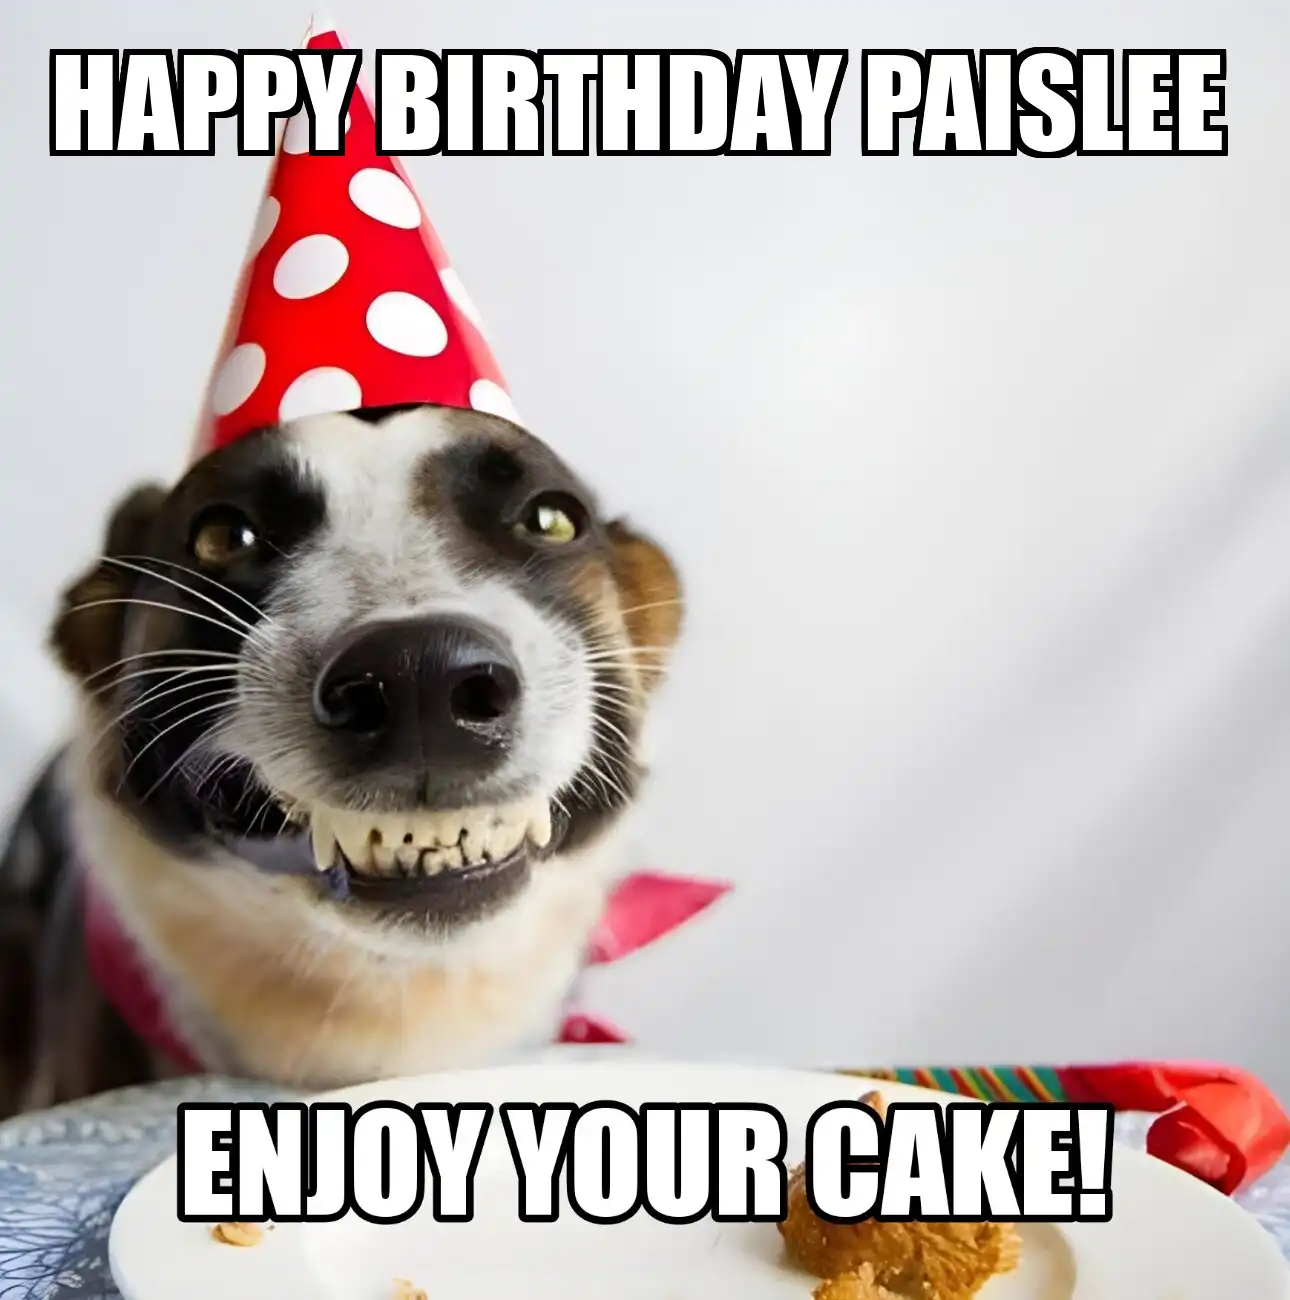 Happy Birthday Paislee Enjoy Your Cake Dog Meme